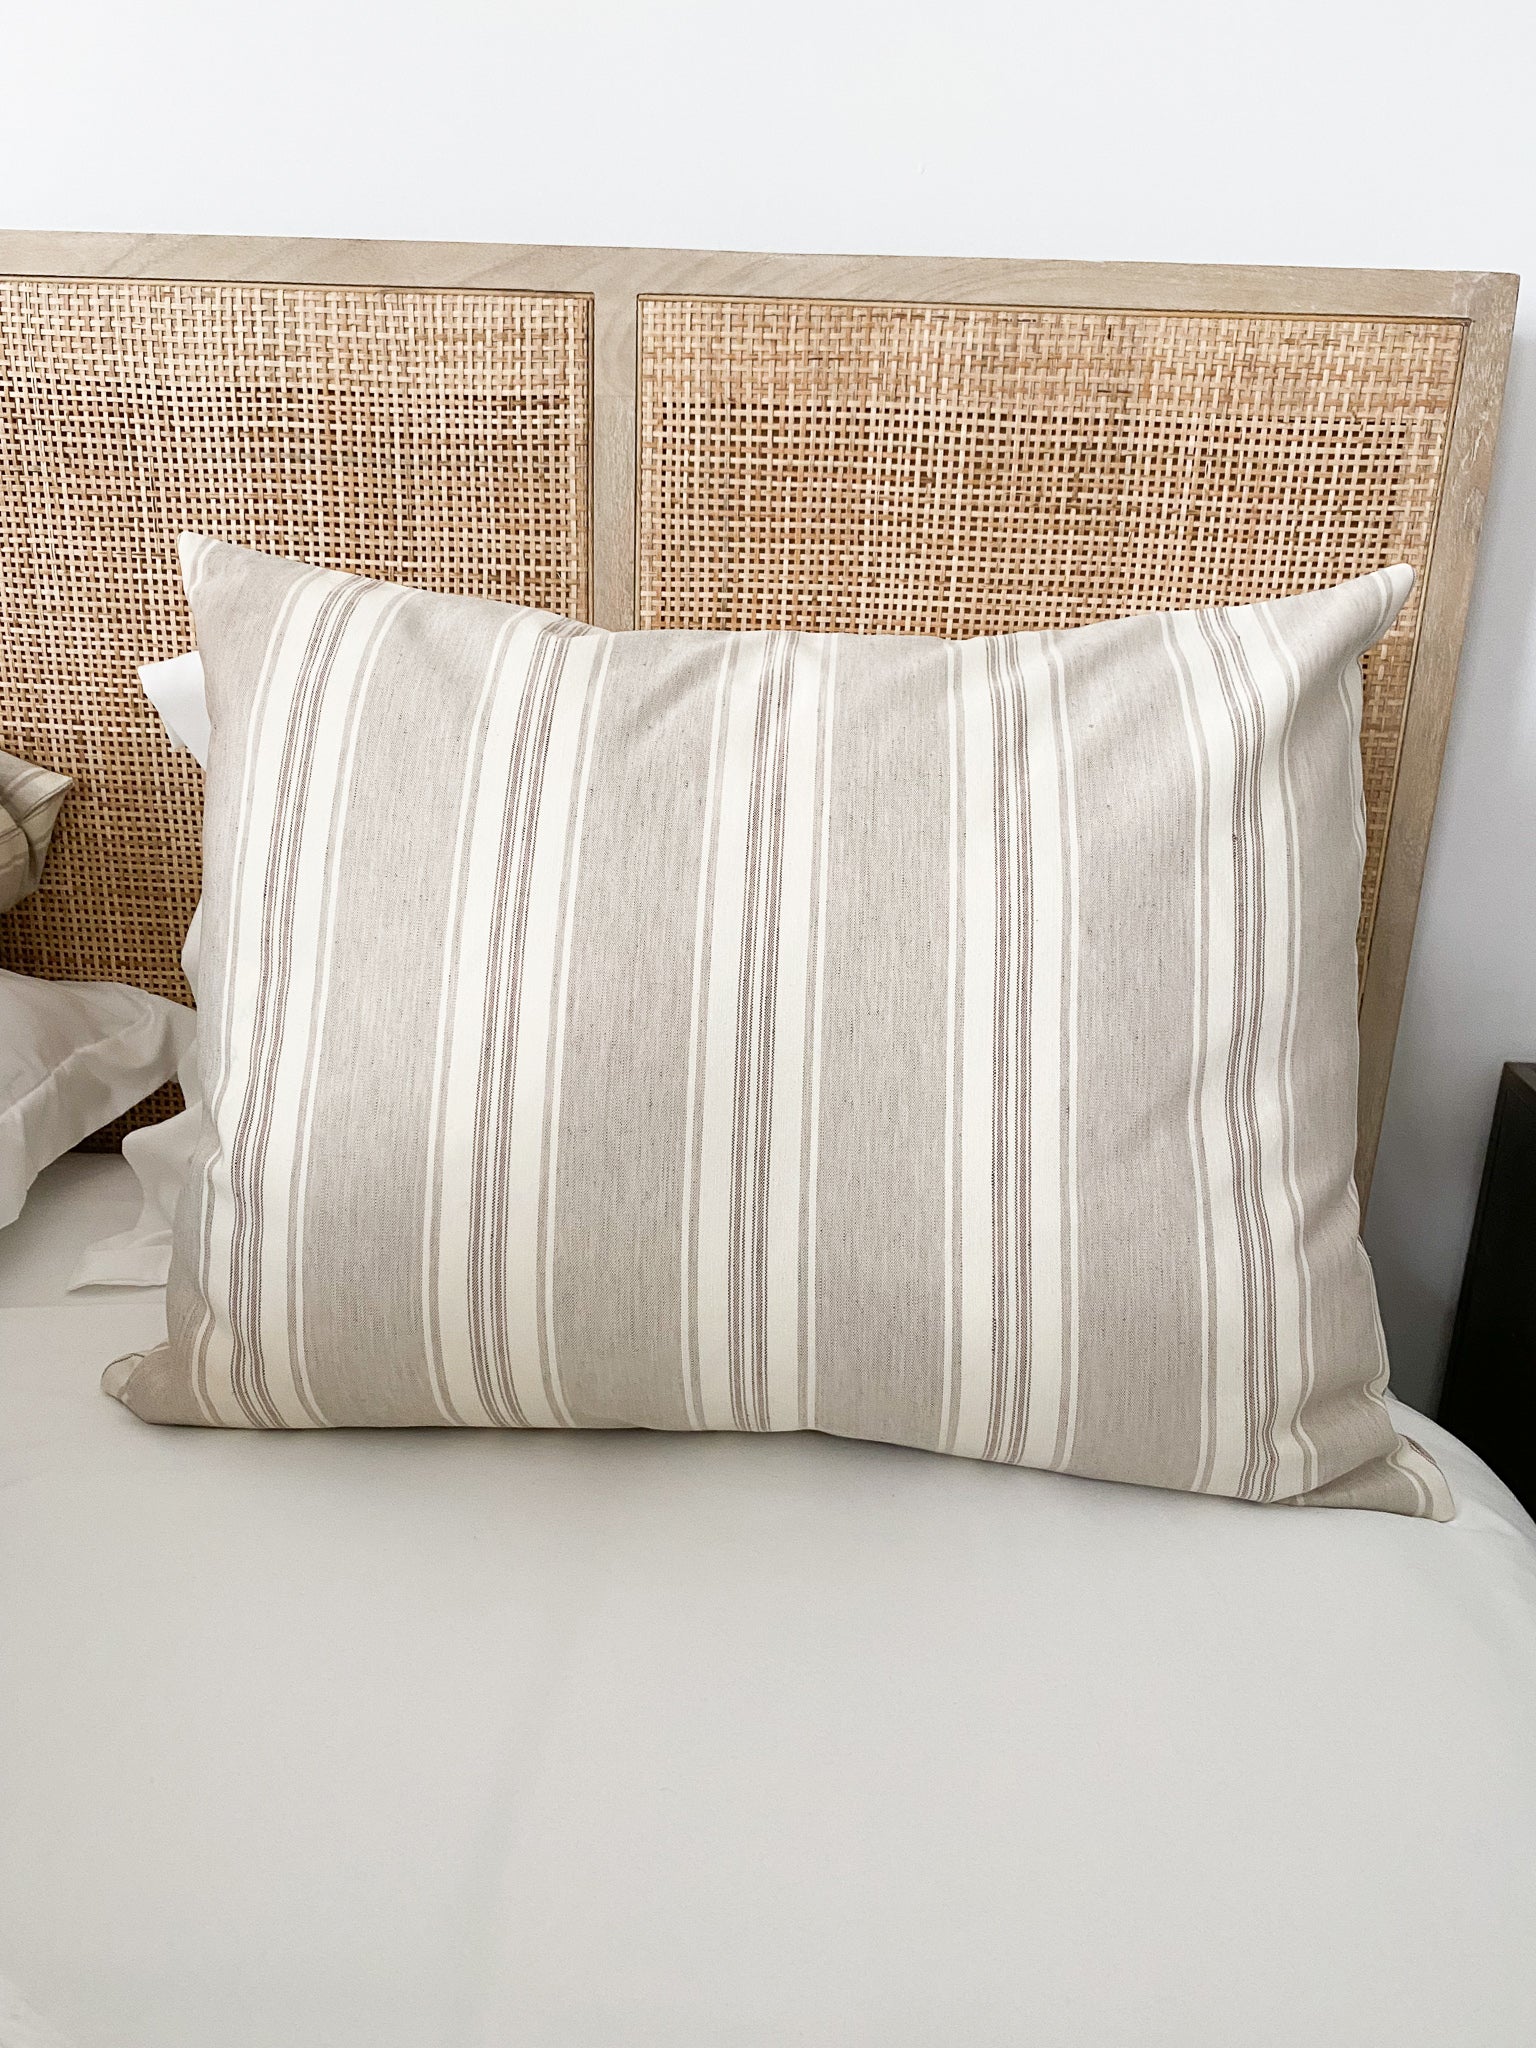 Vanilla Latte Stripes Pillow Cover